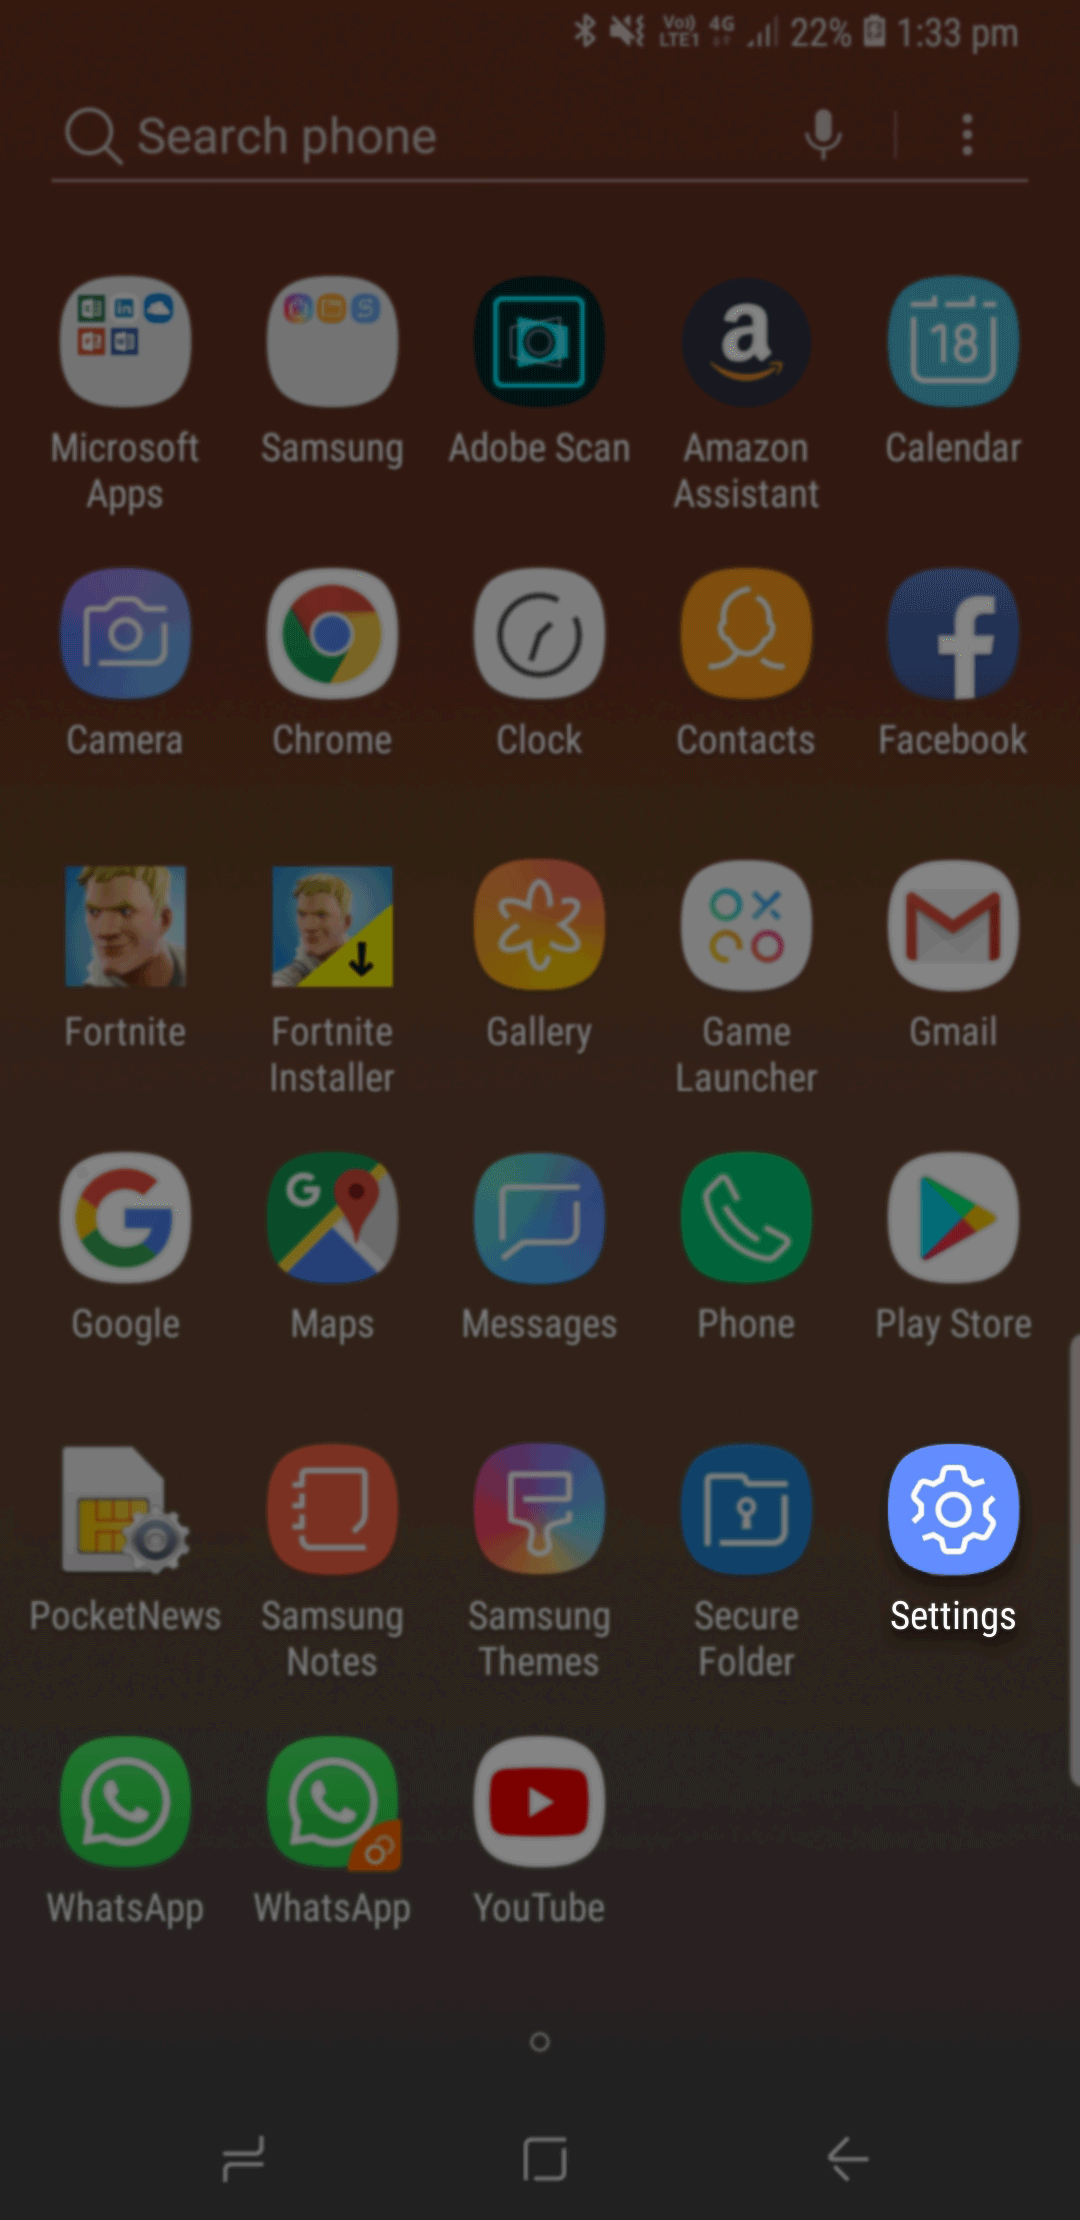 samsung smartview mobile app will not display menu